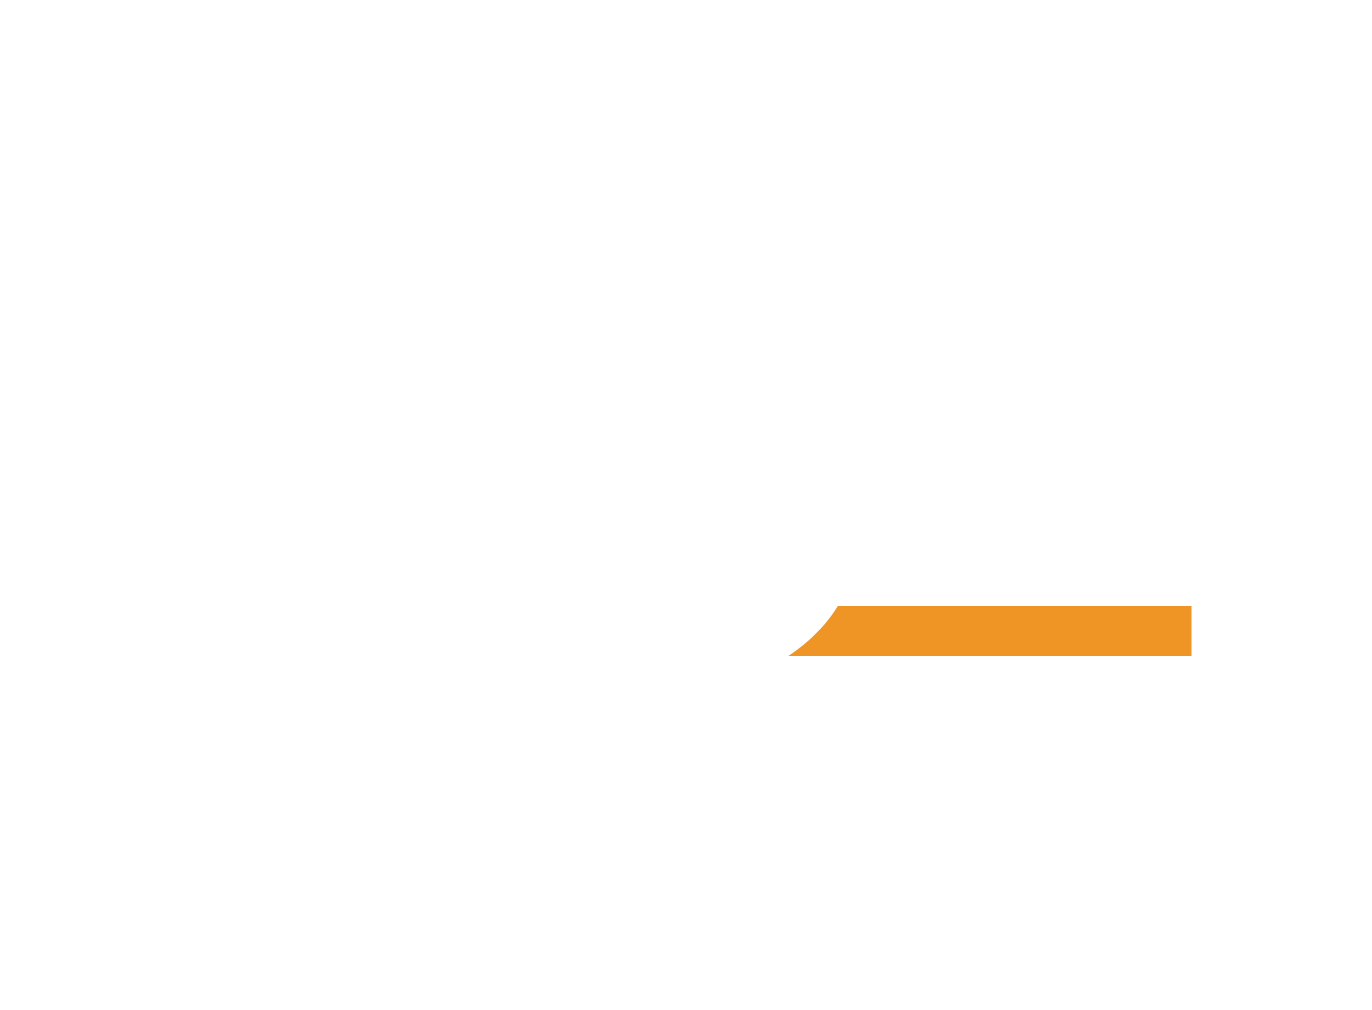 cb logo